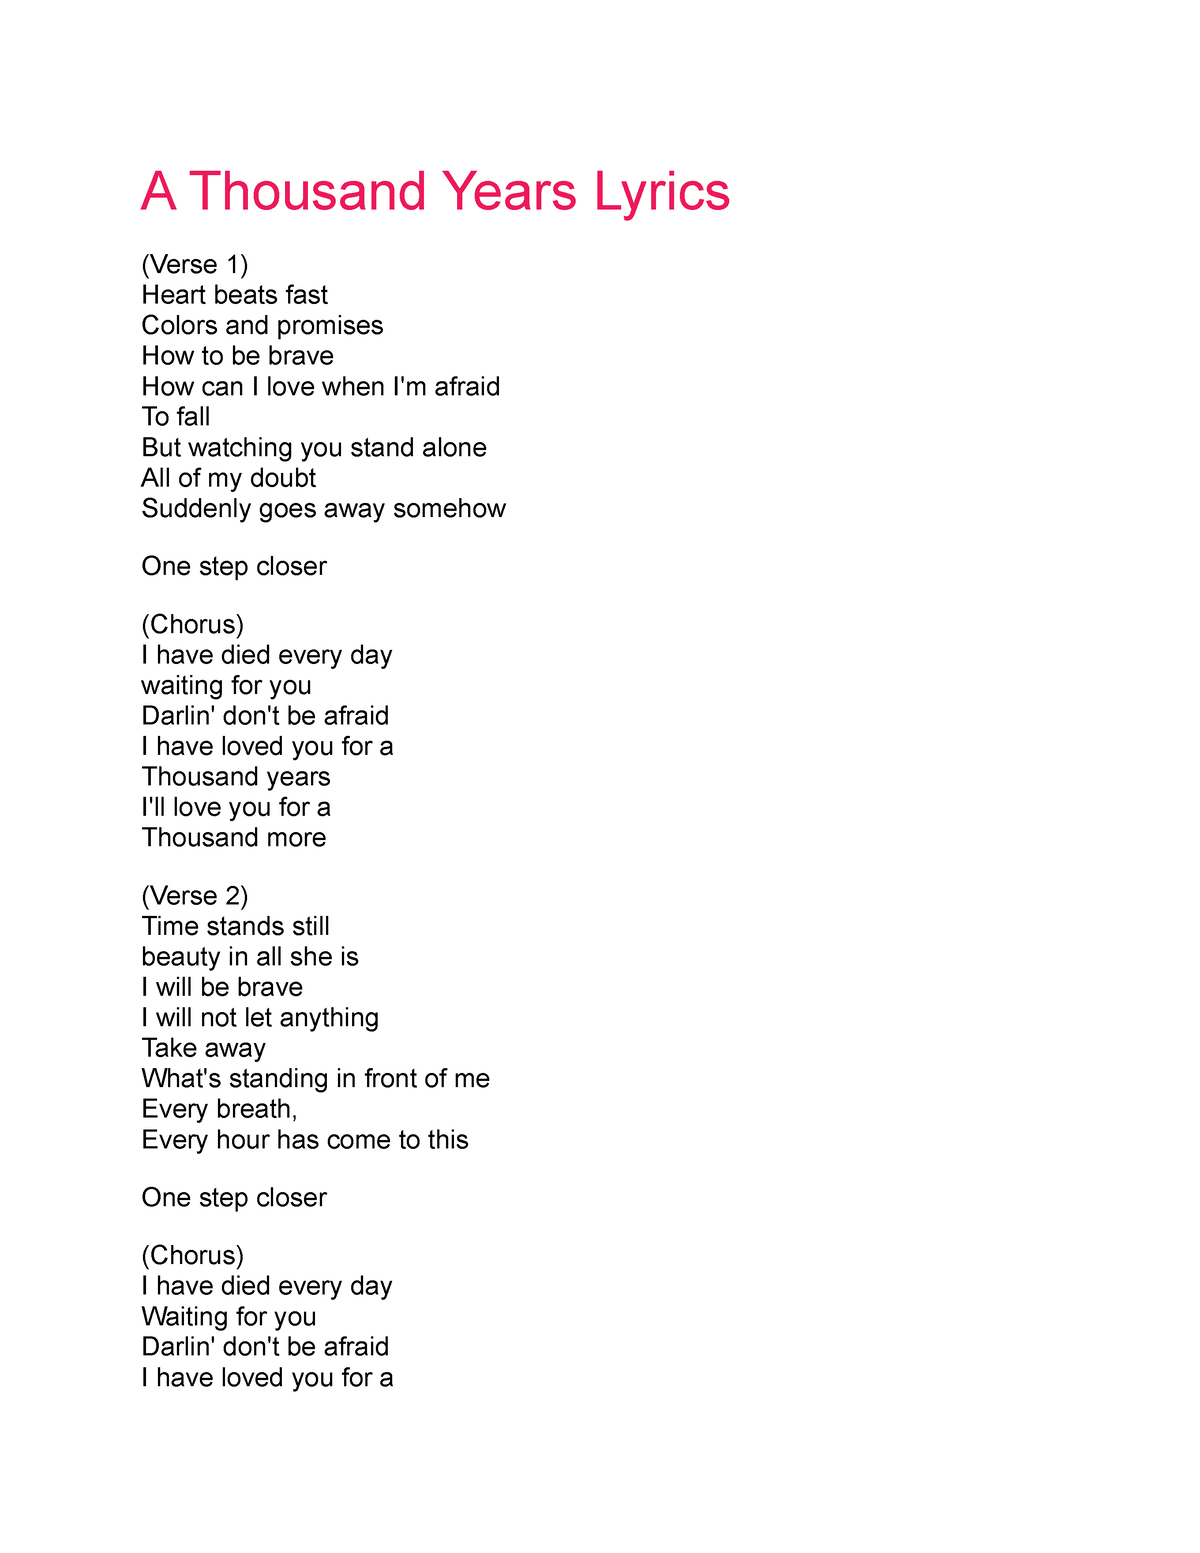 A thousand years Lyrics